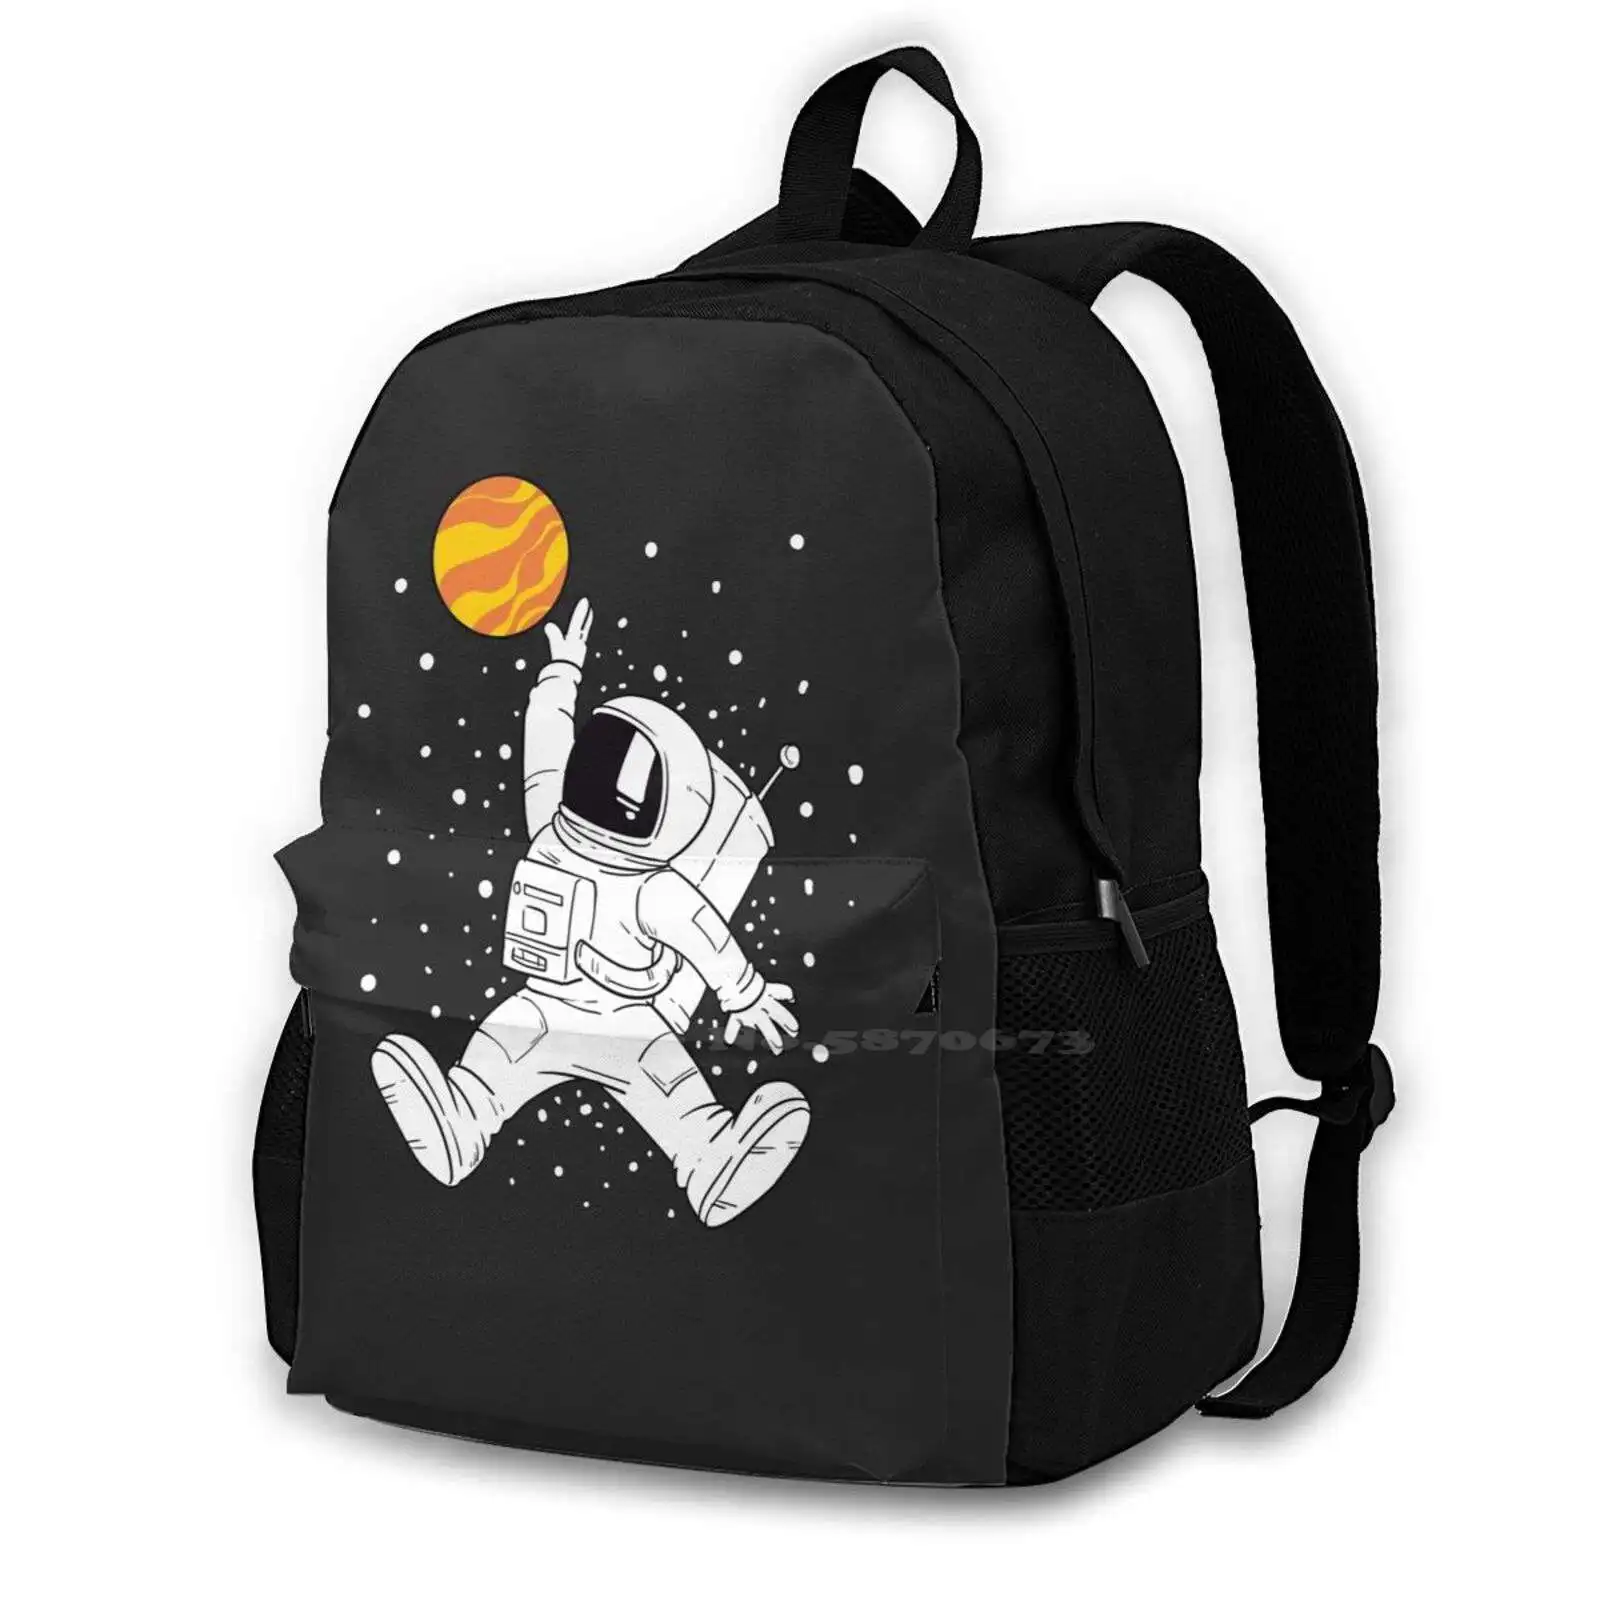 

Astonaut Space Jump Backpack For Student School Laptop Travel Bag Sport Ball Planetary Planet Basket Ball Venus Mars Stars Red